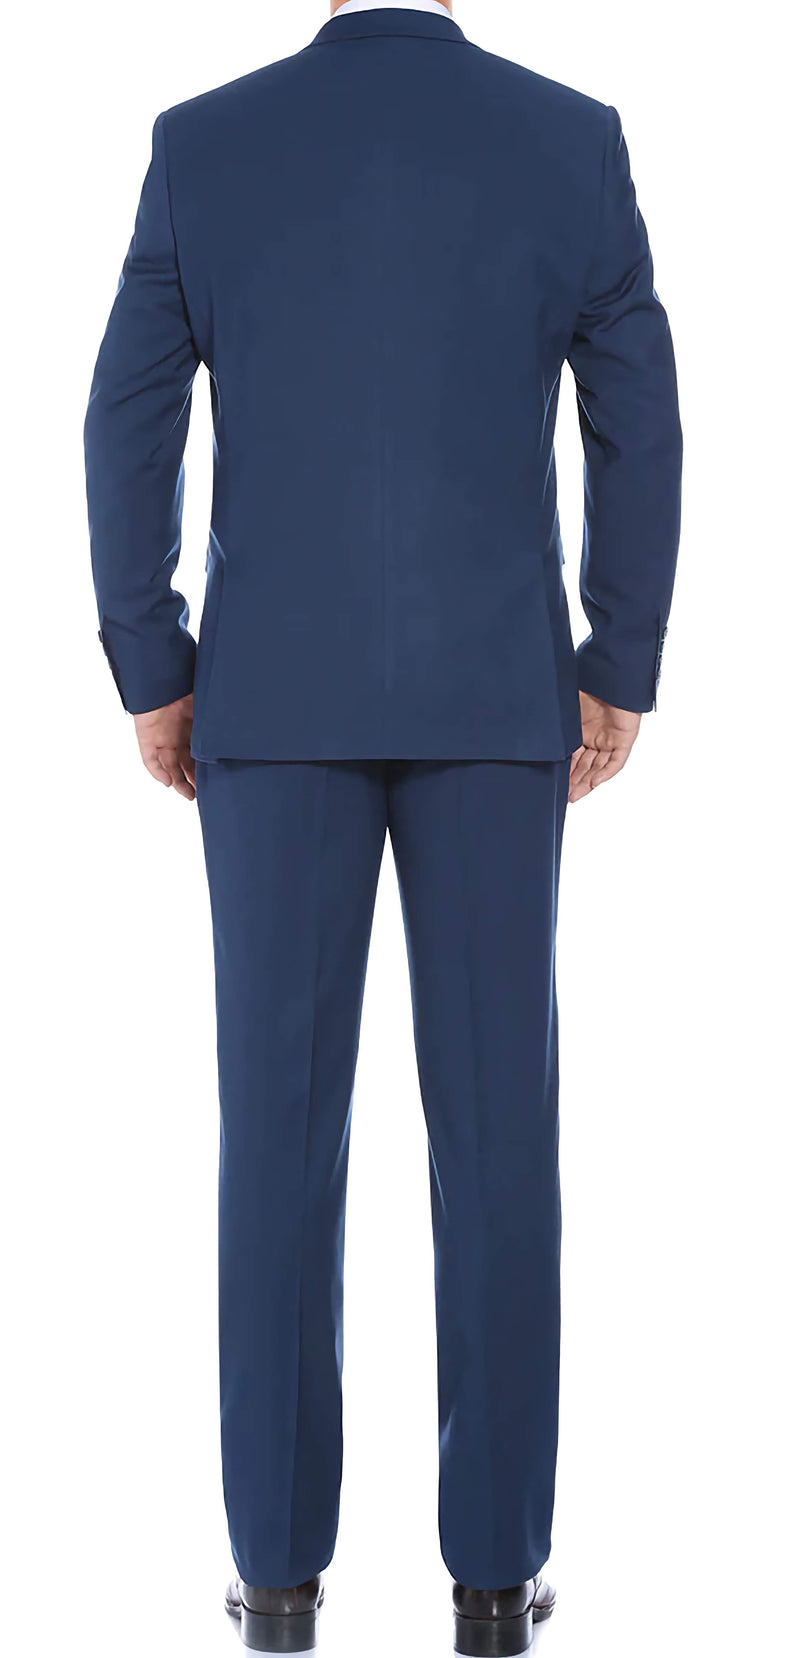 Performance Stretch Suit 2 Piece Slim Fit in Blue - Suits99